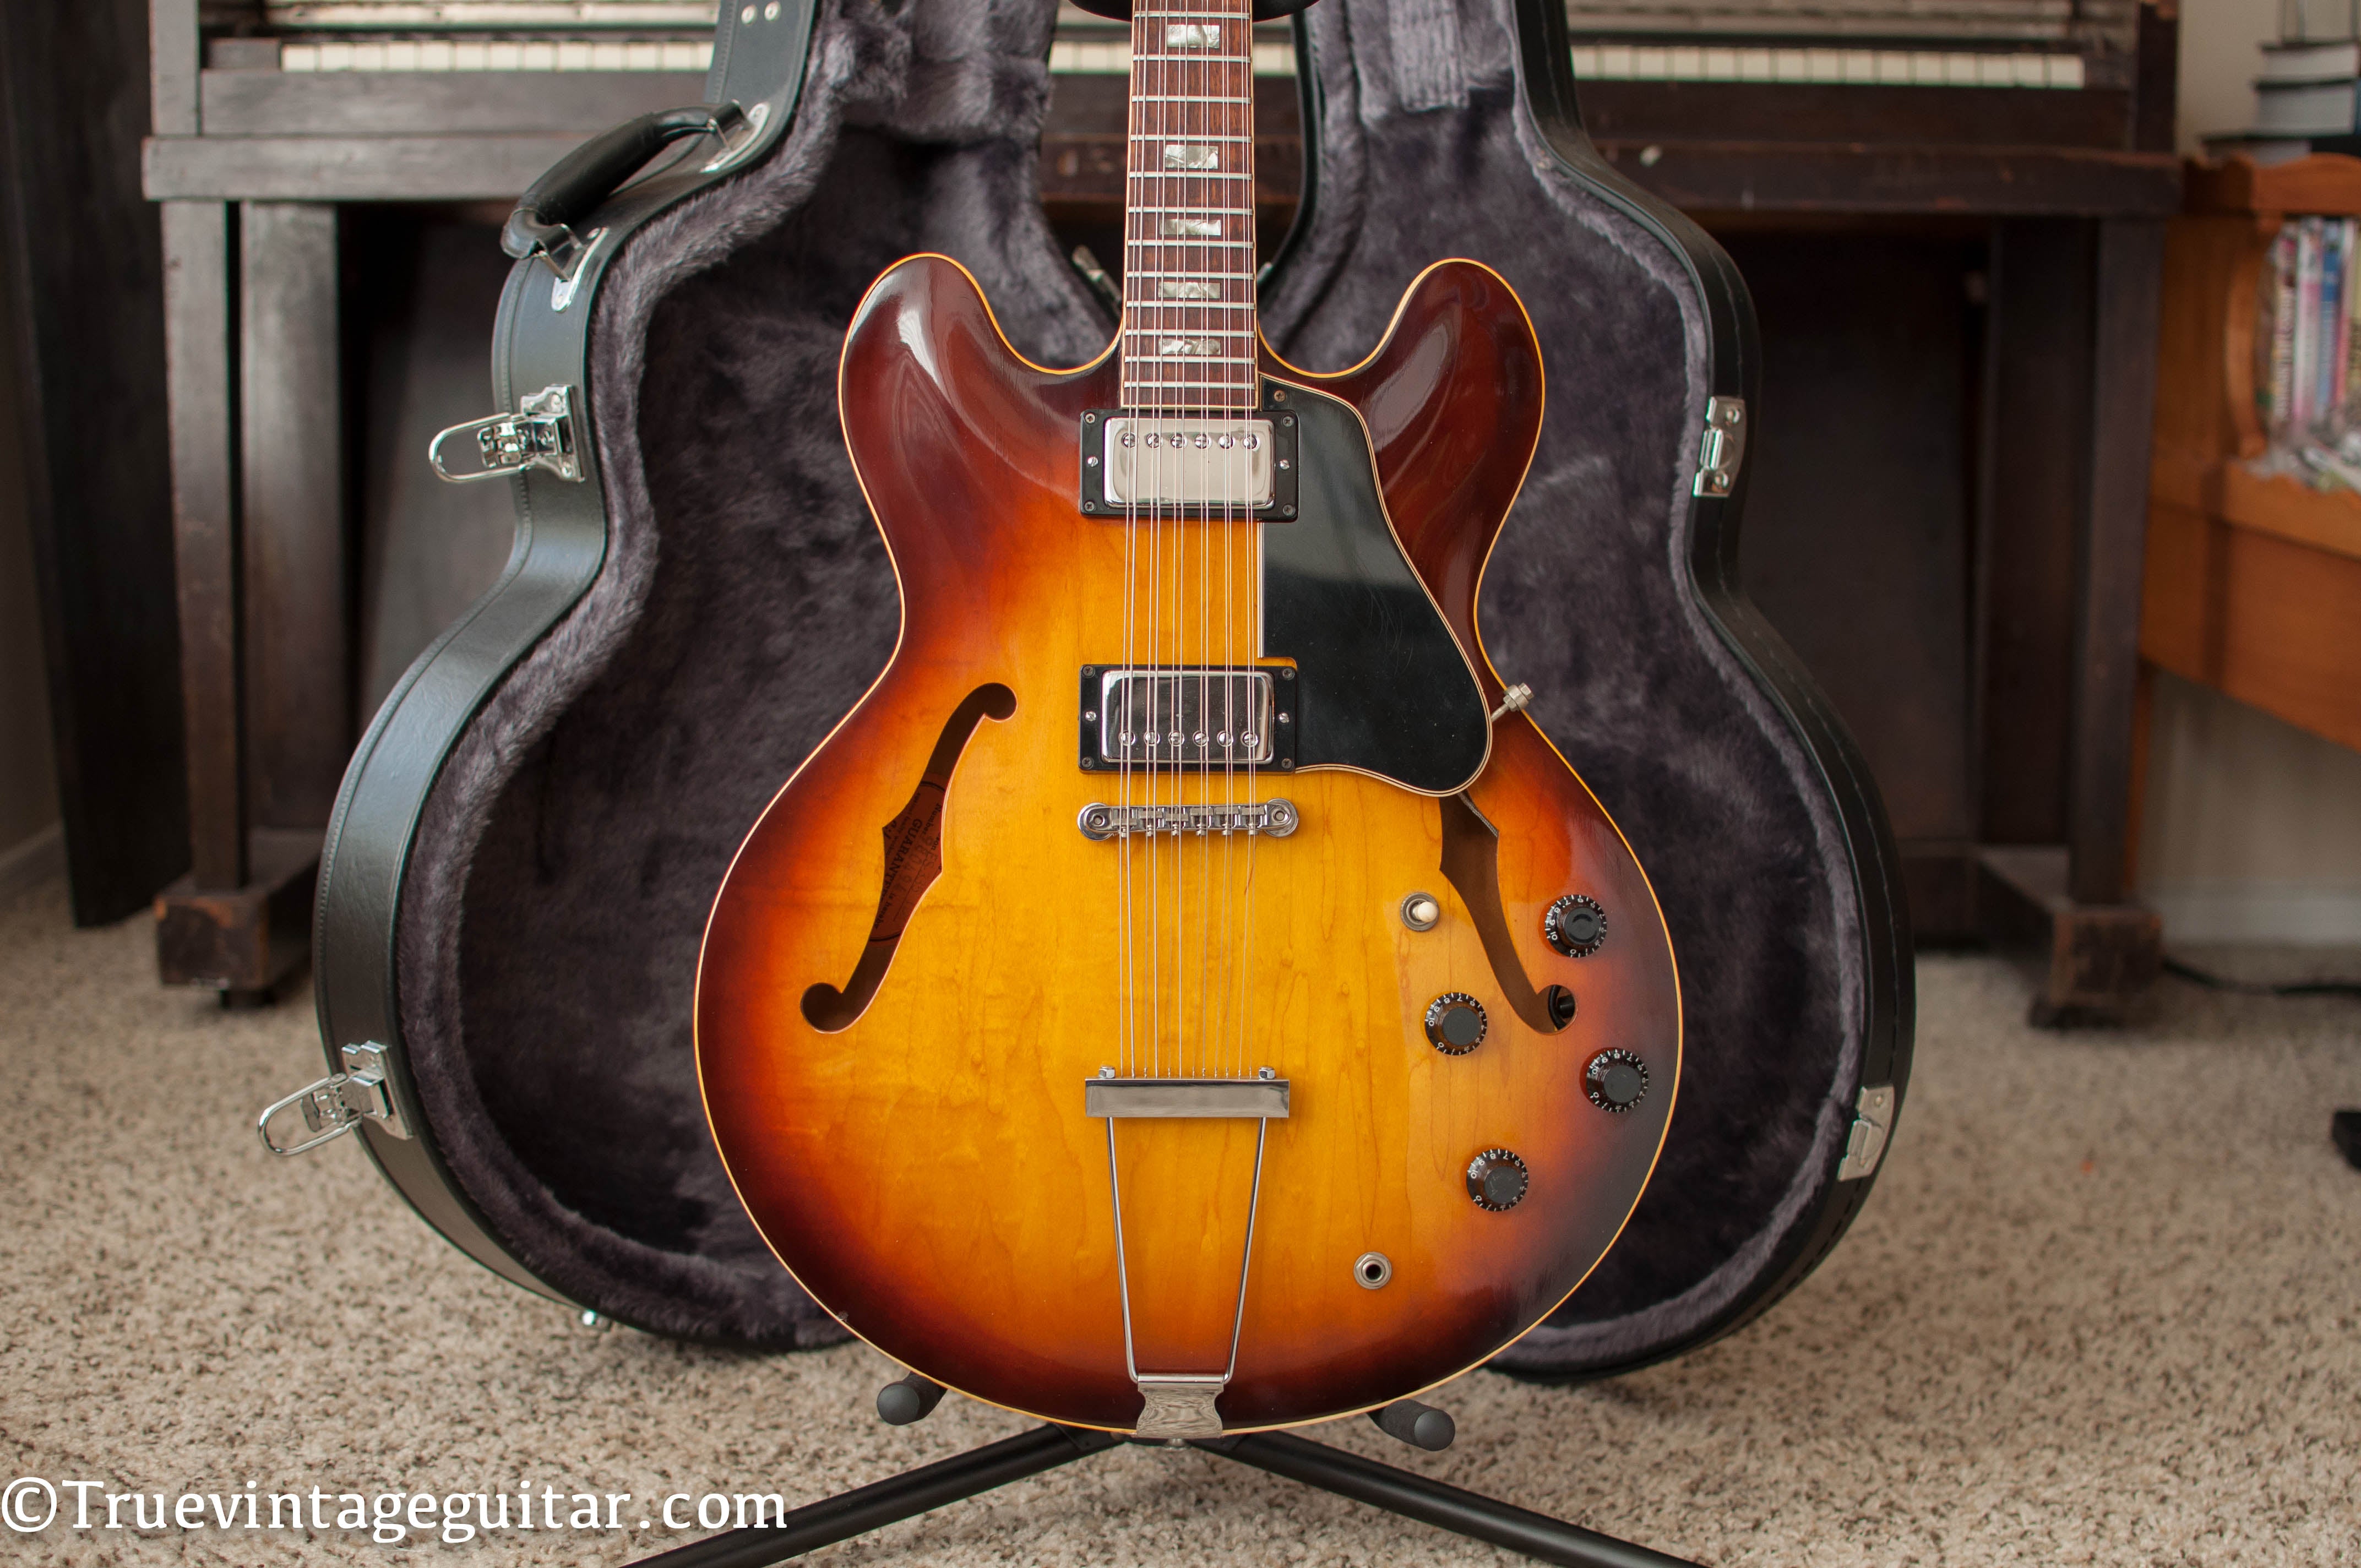 Vintage 1969 Gibson ES-335-12 guitar